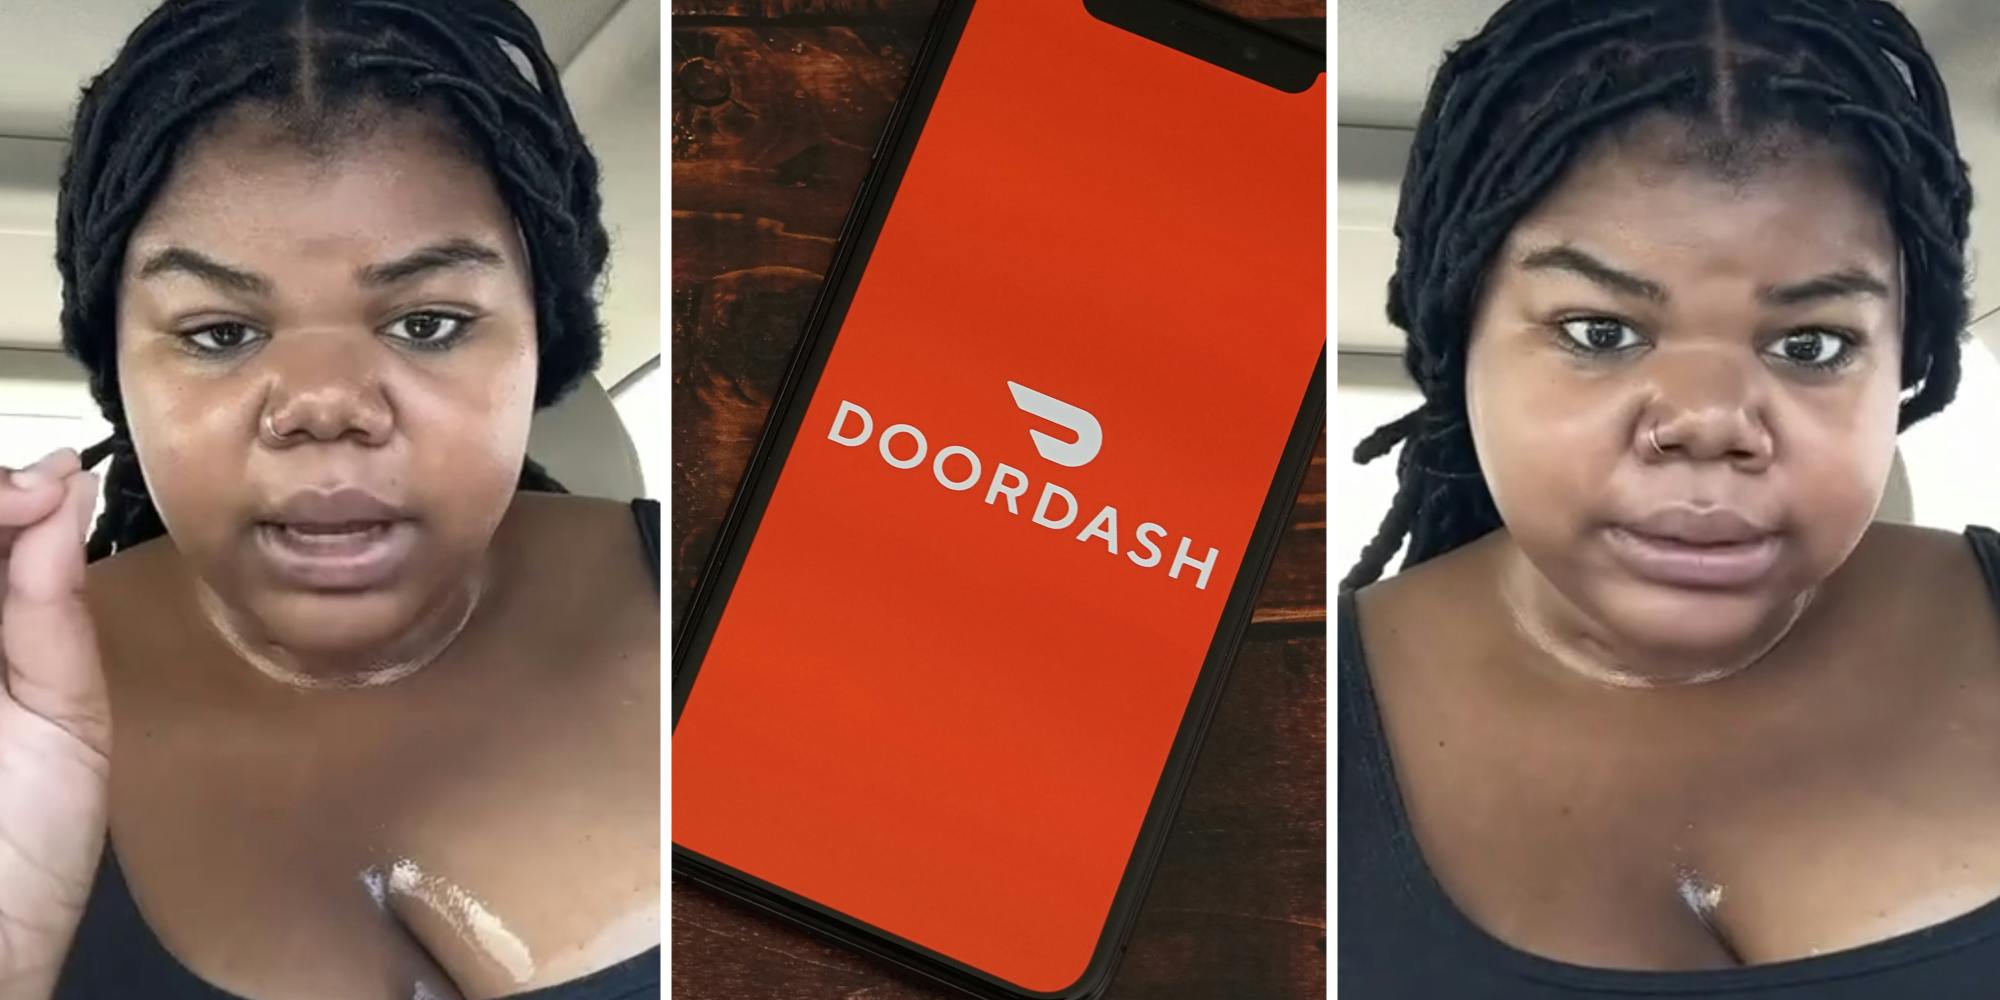 Woman talking(l+r), Doordash app on phone(c)